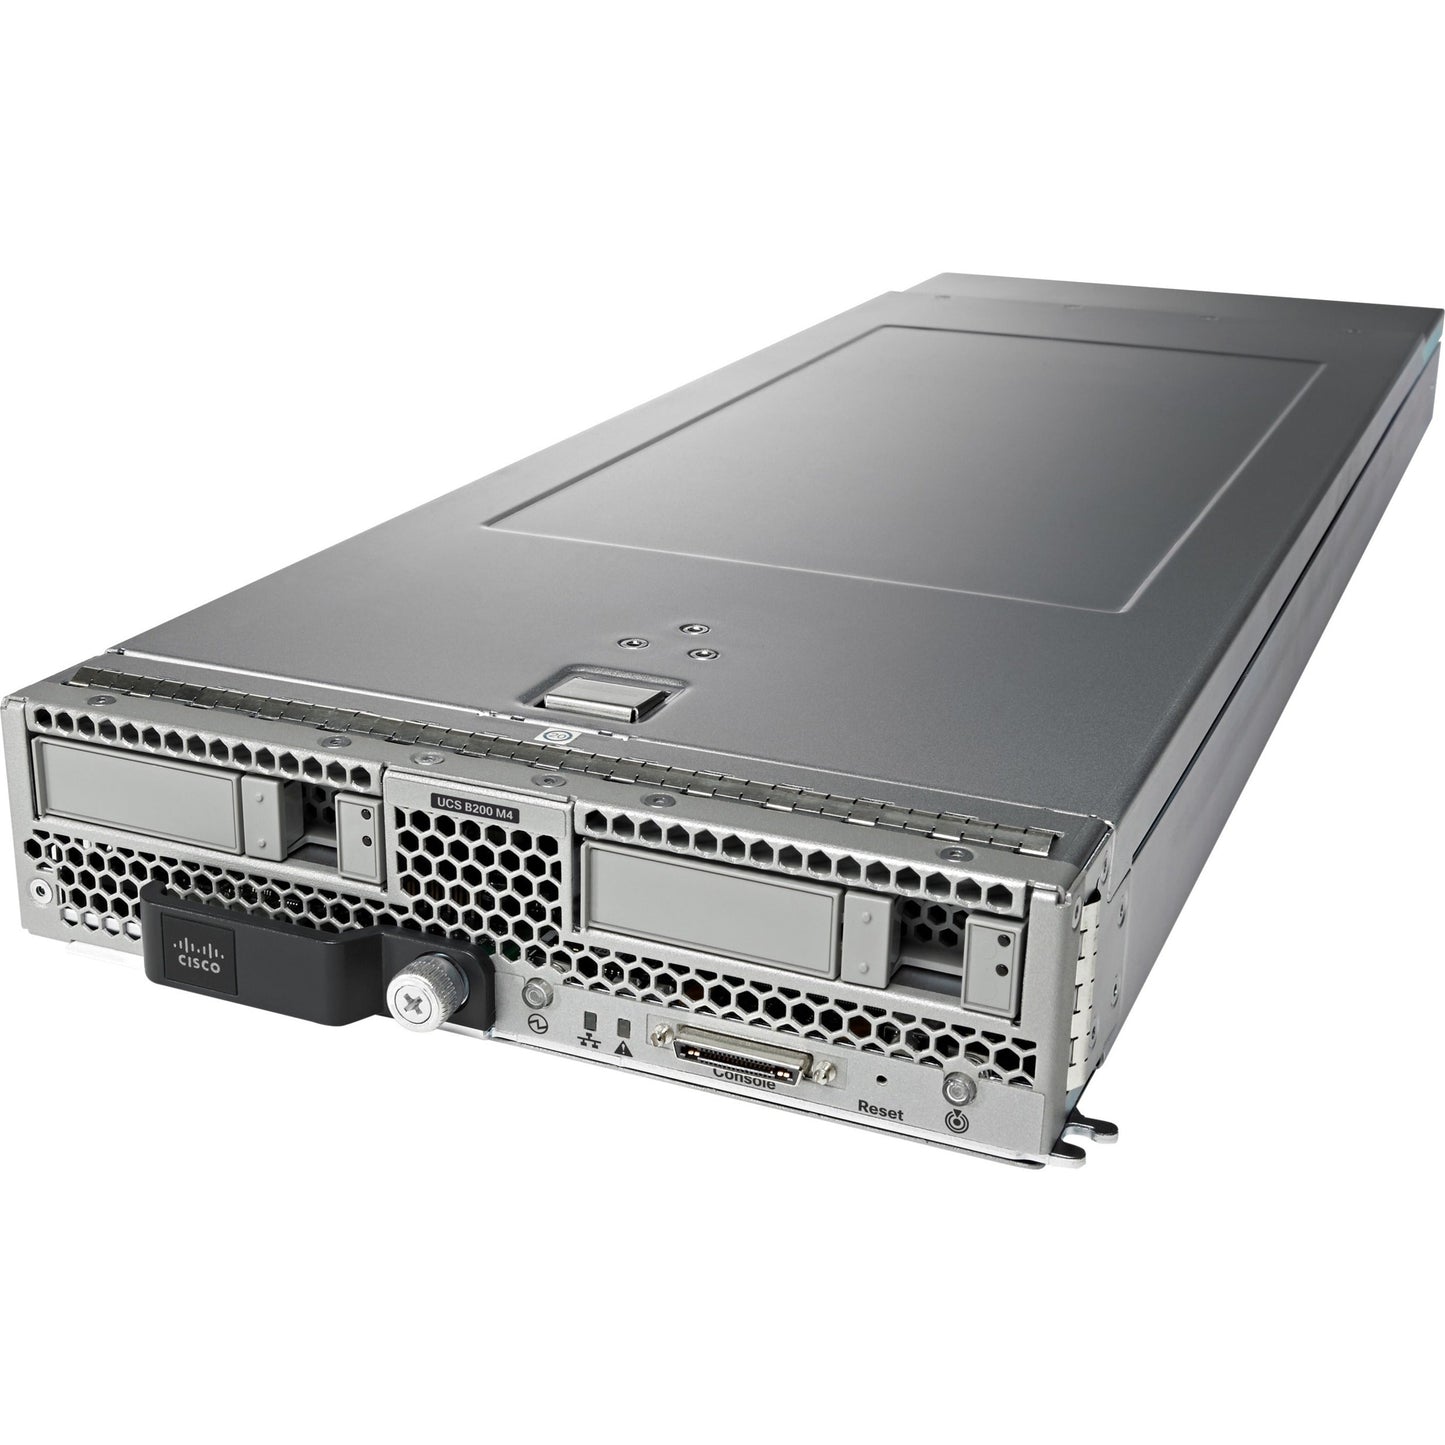 Cisco B200 M4 Blade Server - 2 x Intel Xeon E5-2630 v3 2.40 GHz - 128 GB RAM